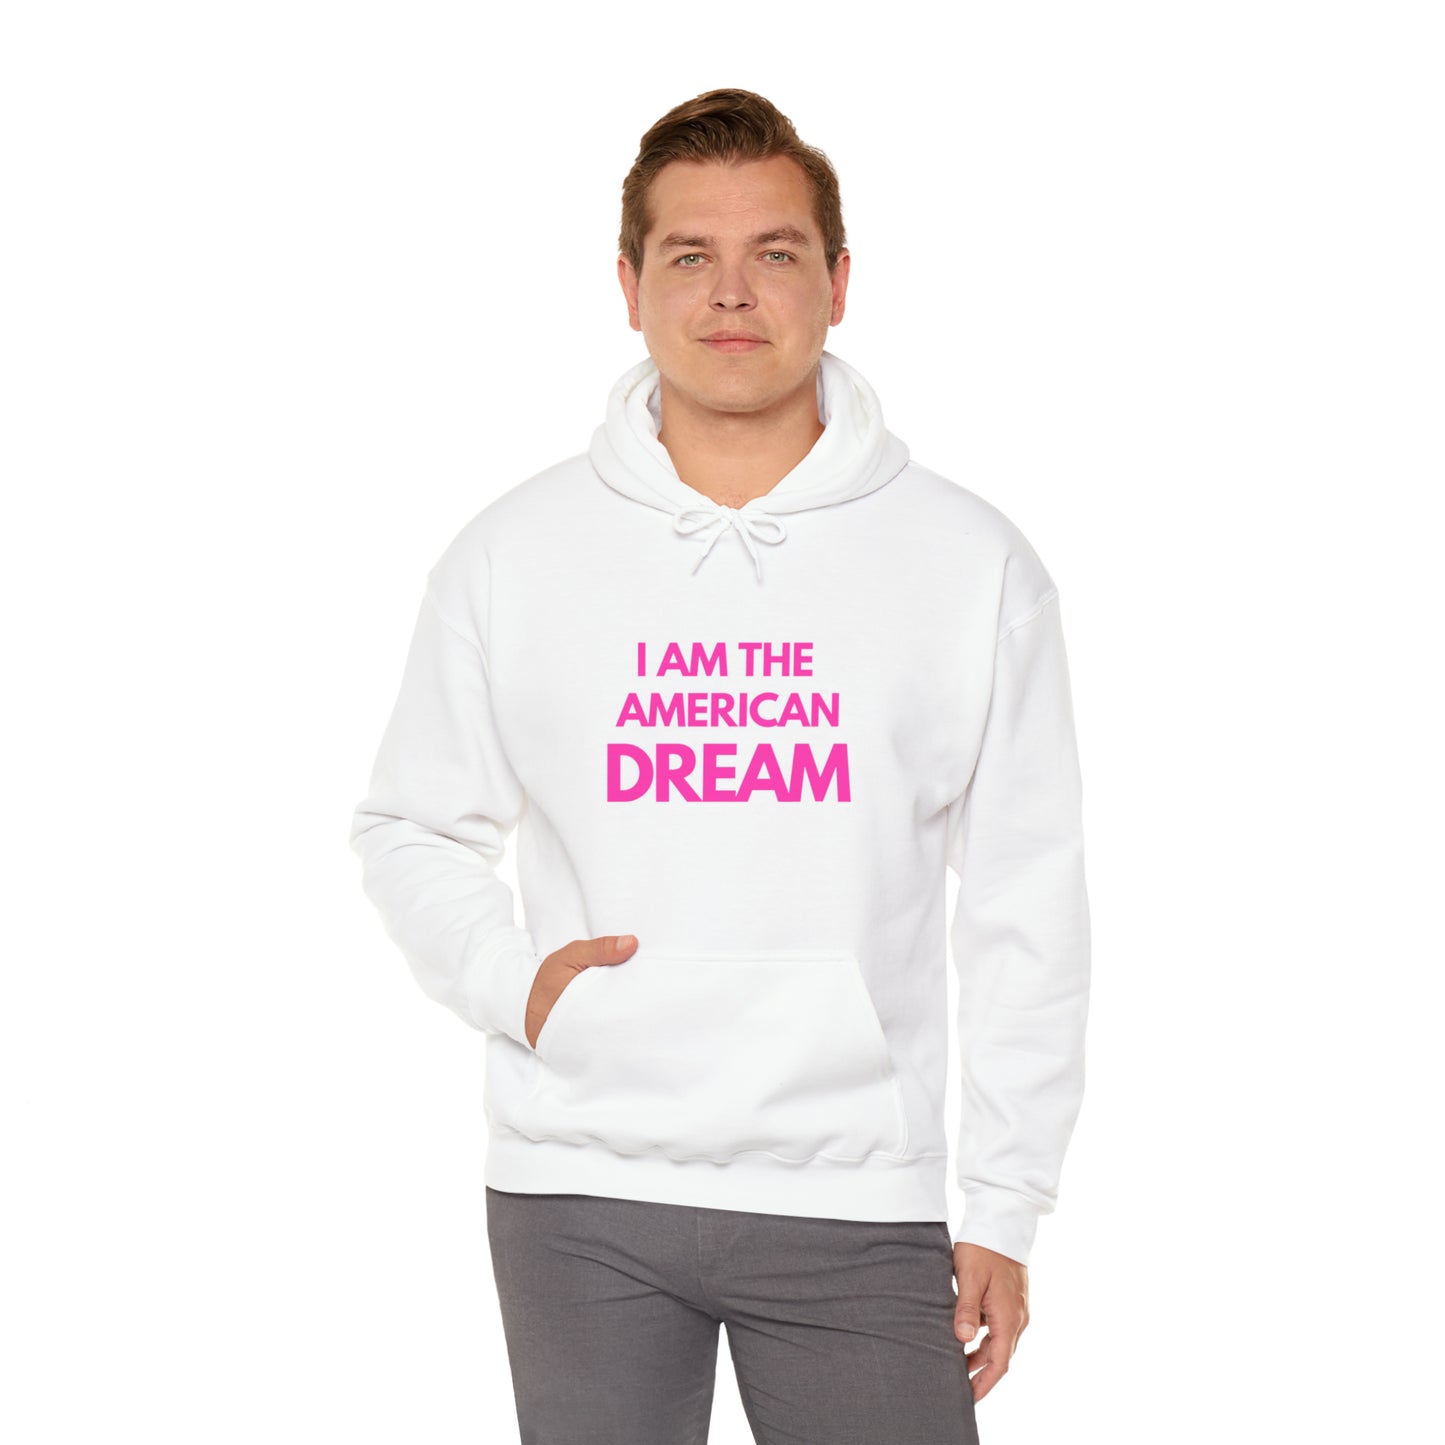 I am the american dream | Hooded Sweatshirt